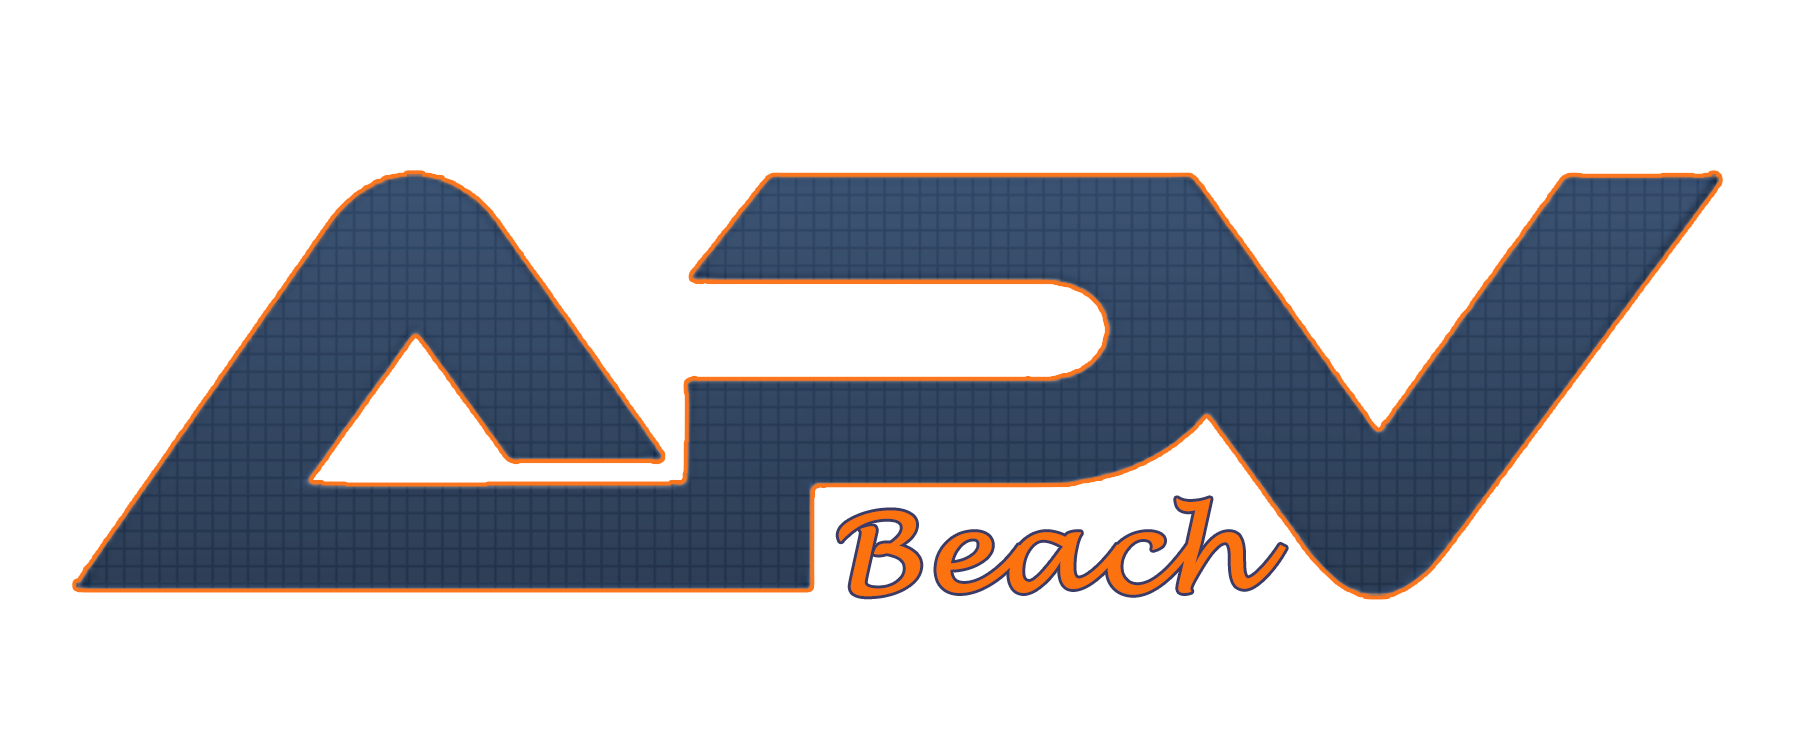 Apex Beach Volleyball